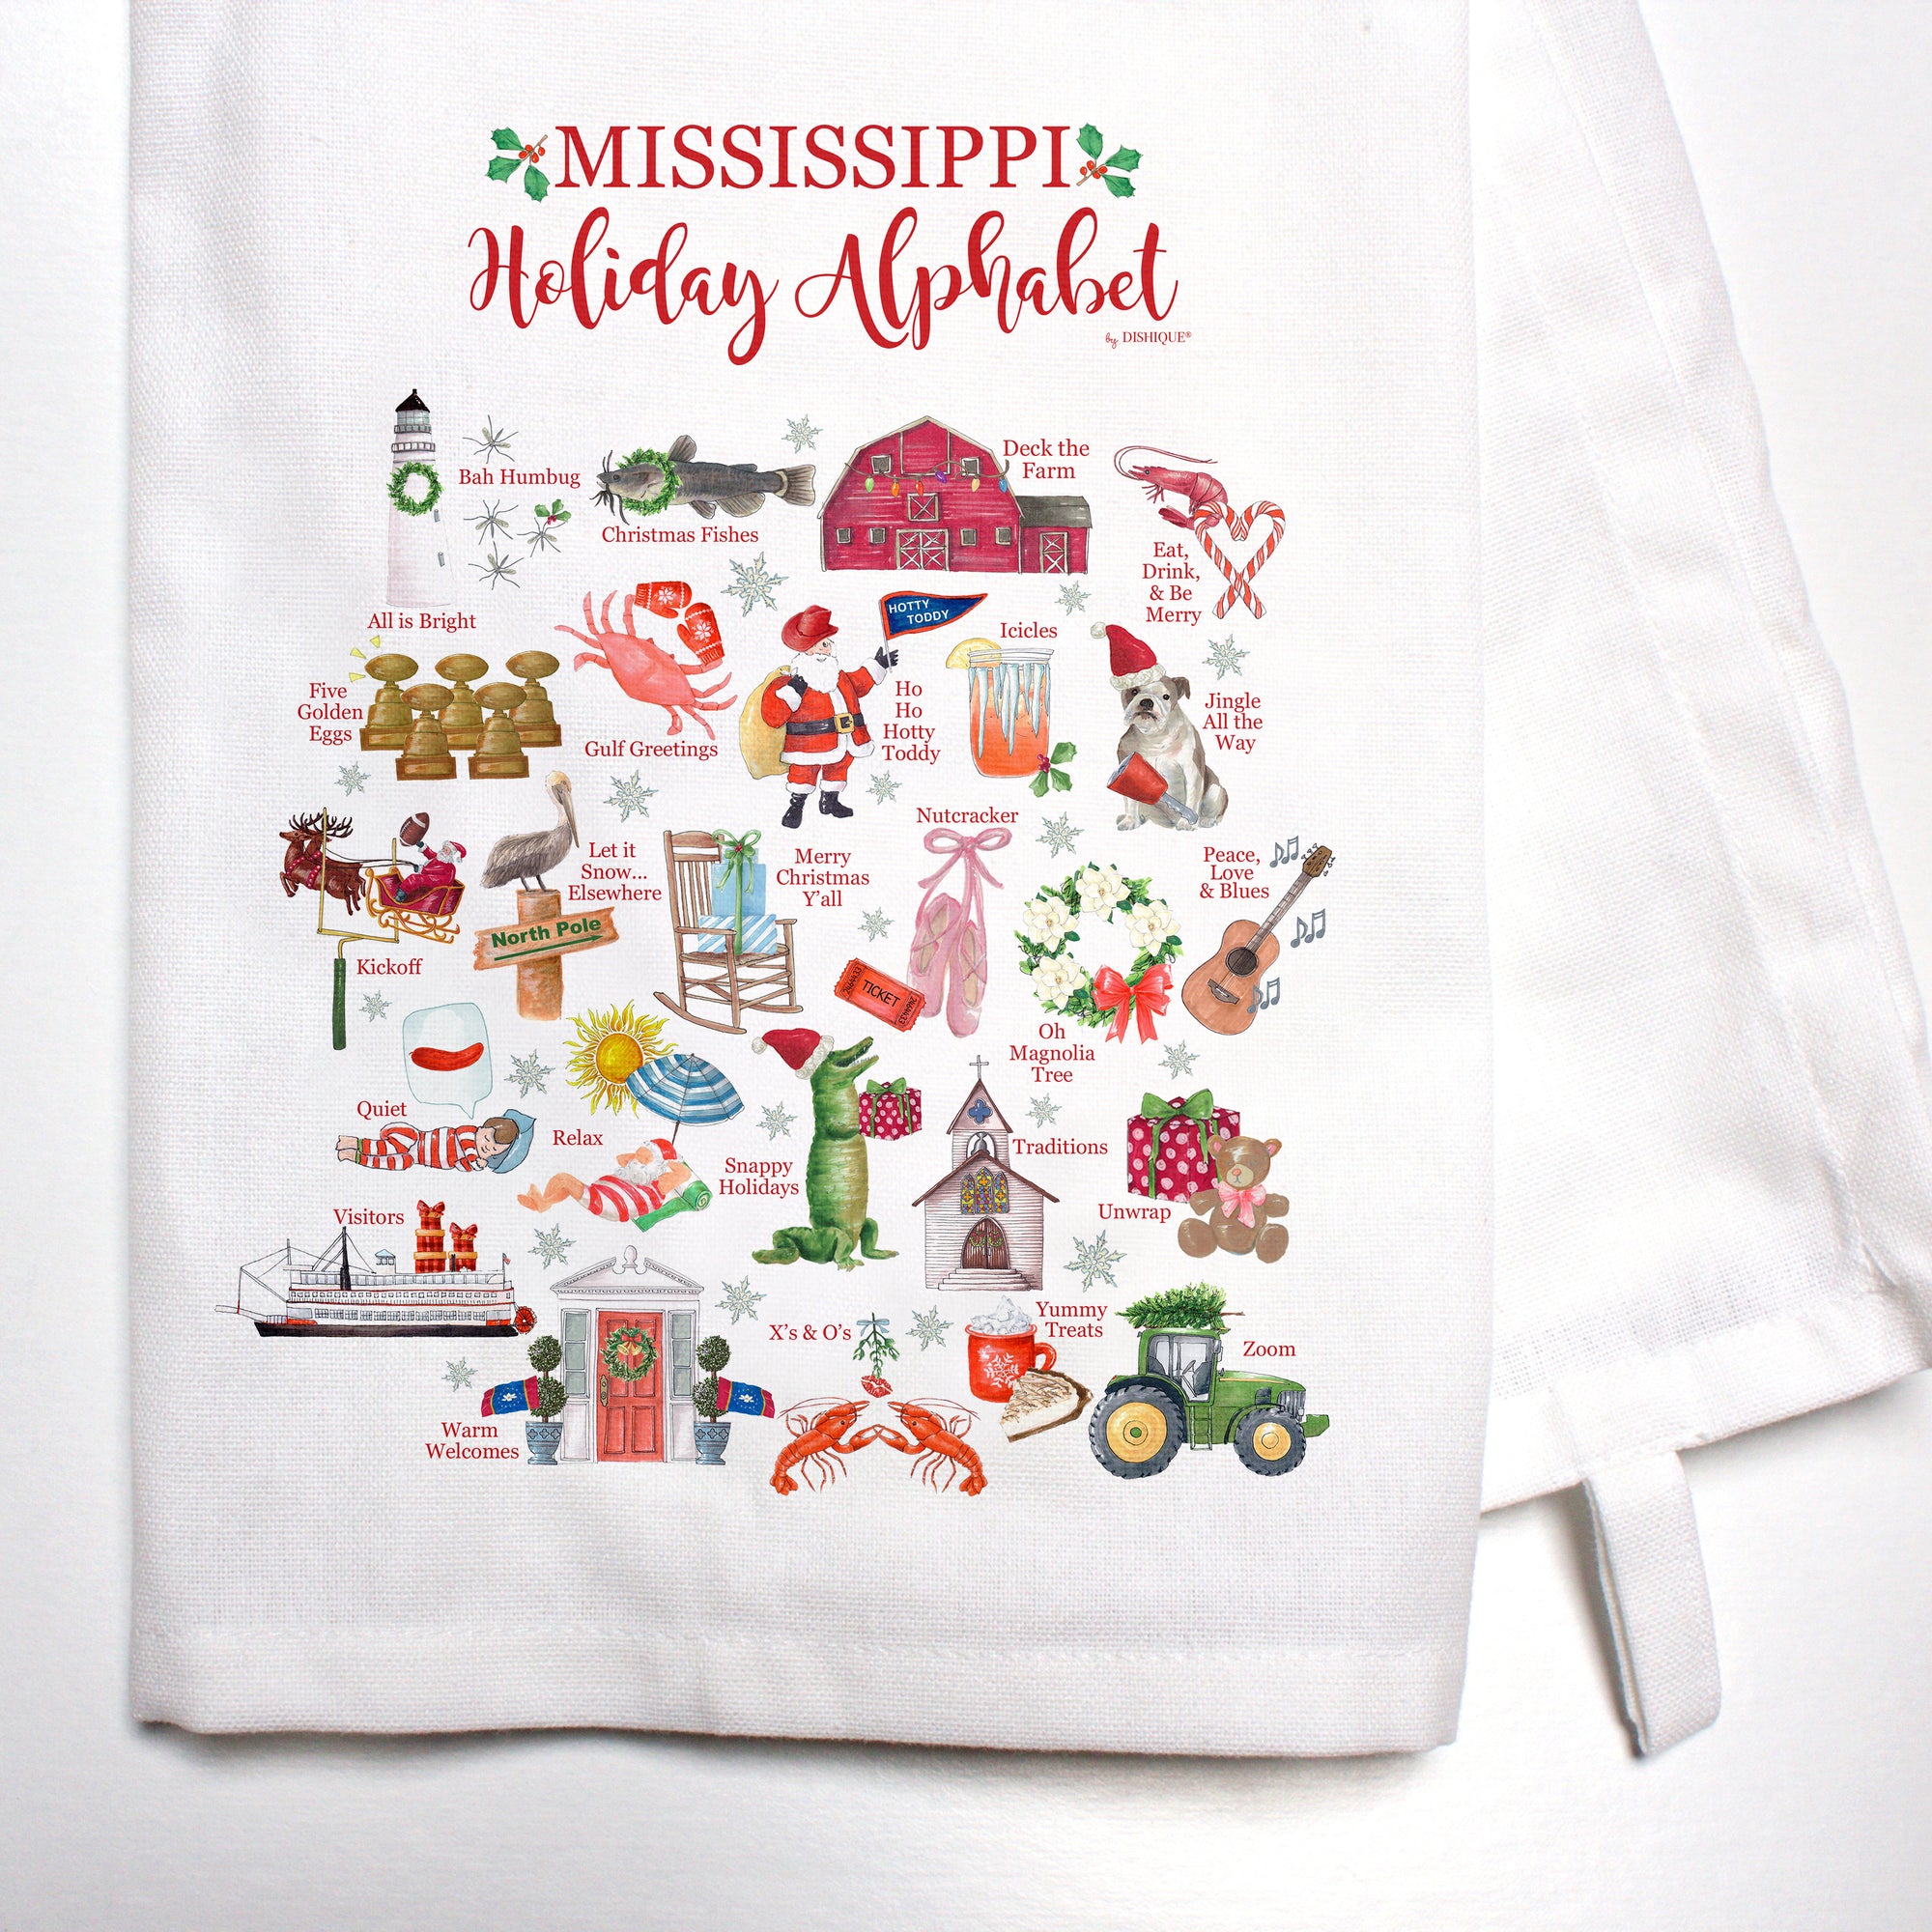 Mississippi Holiday Alphabet Bar Towel